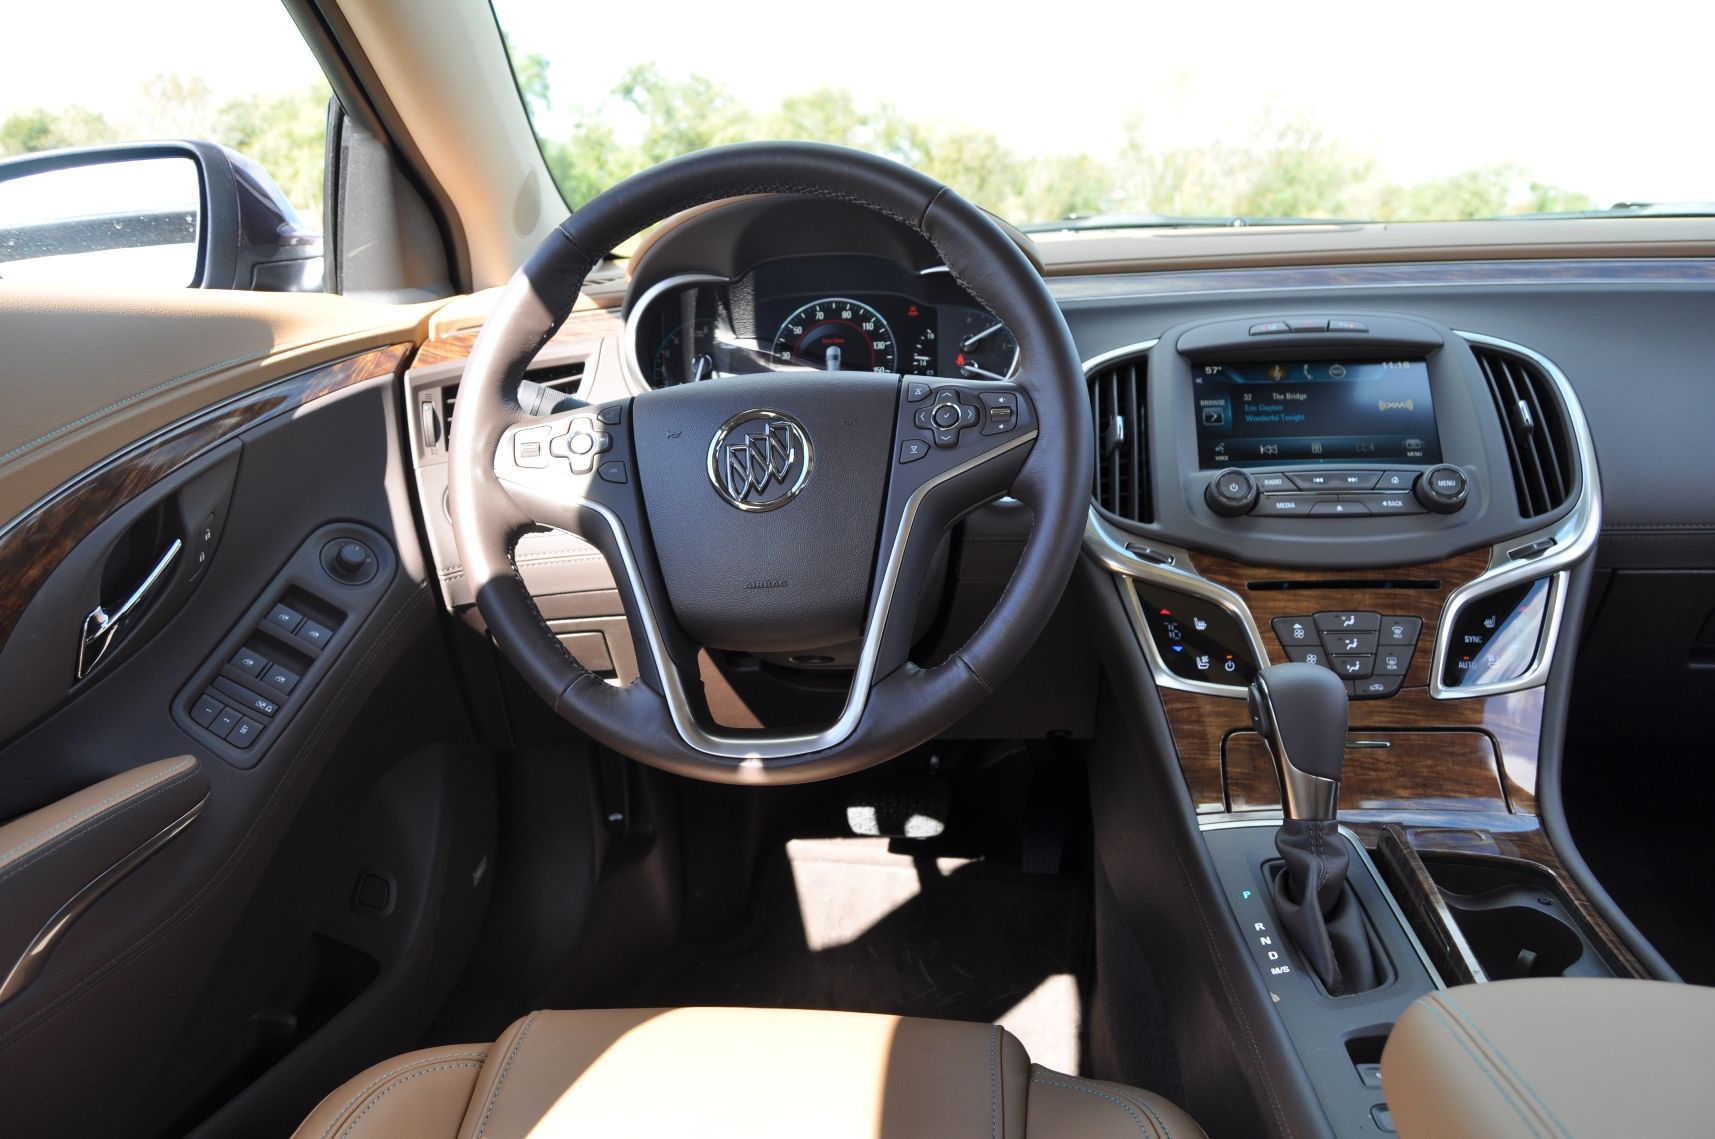 2014 Buick LaCrosse - Driven